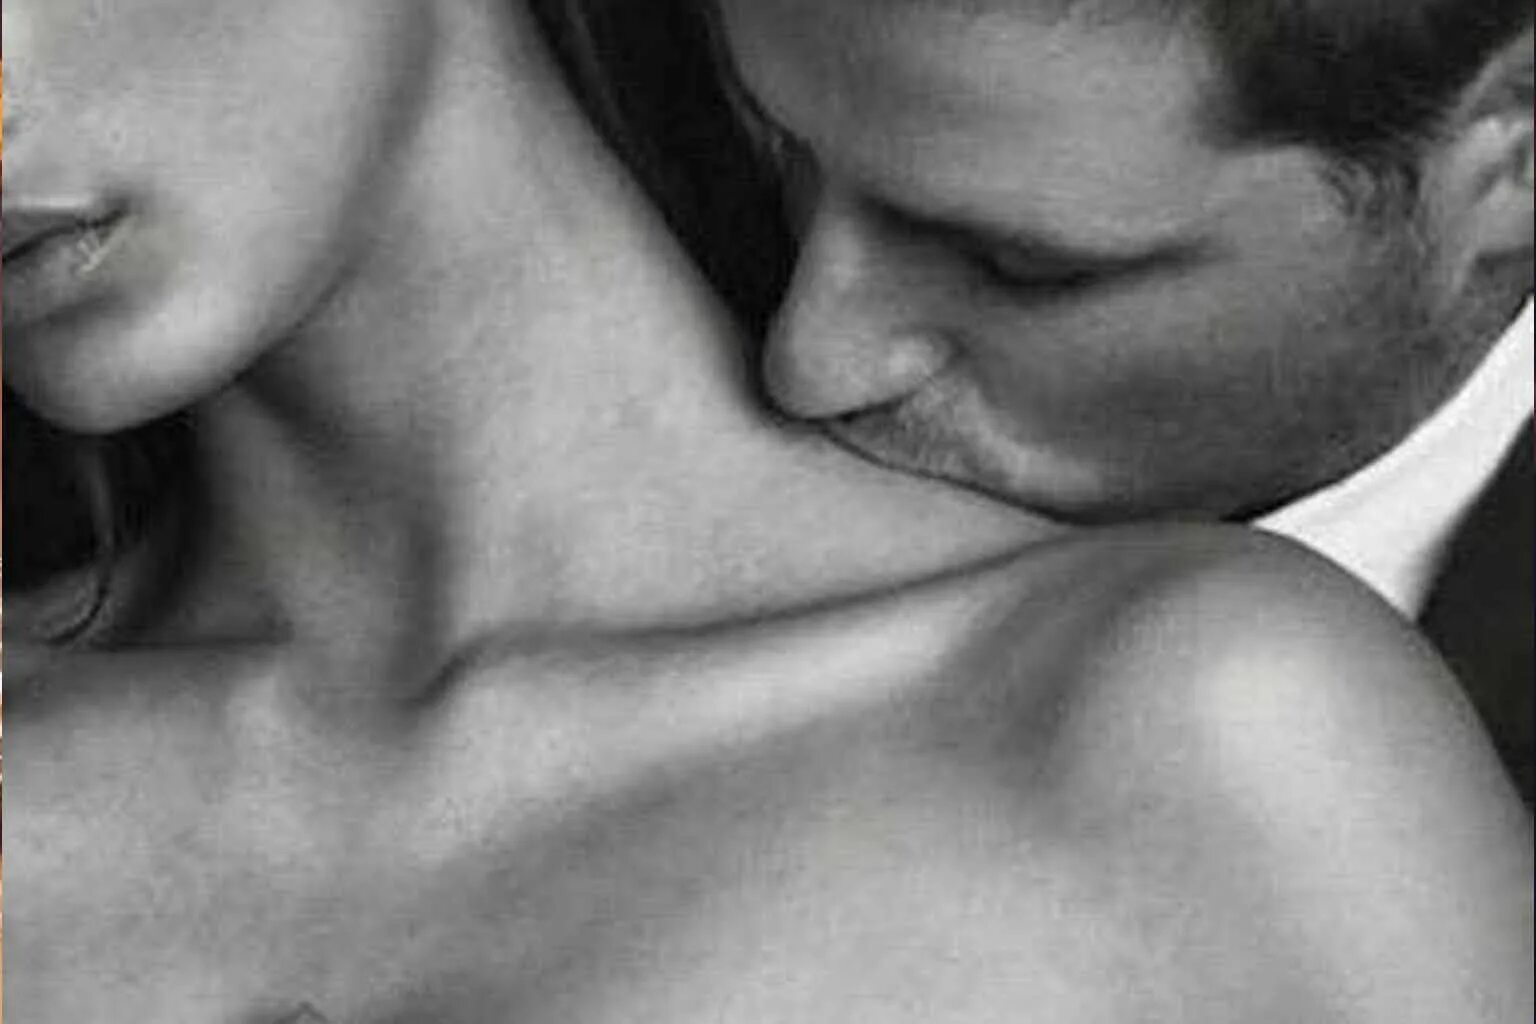 Sensual kind. Поцелуй в шею. Поцелуй в плечо. Нежный поцелуй в шею. Нежный поцелуй в плечо.